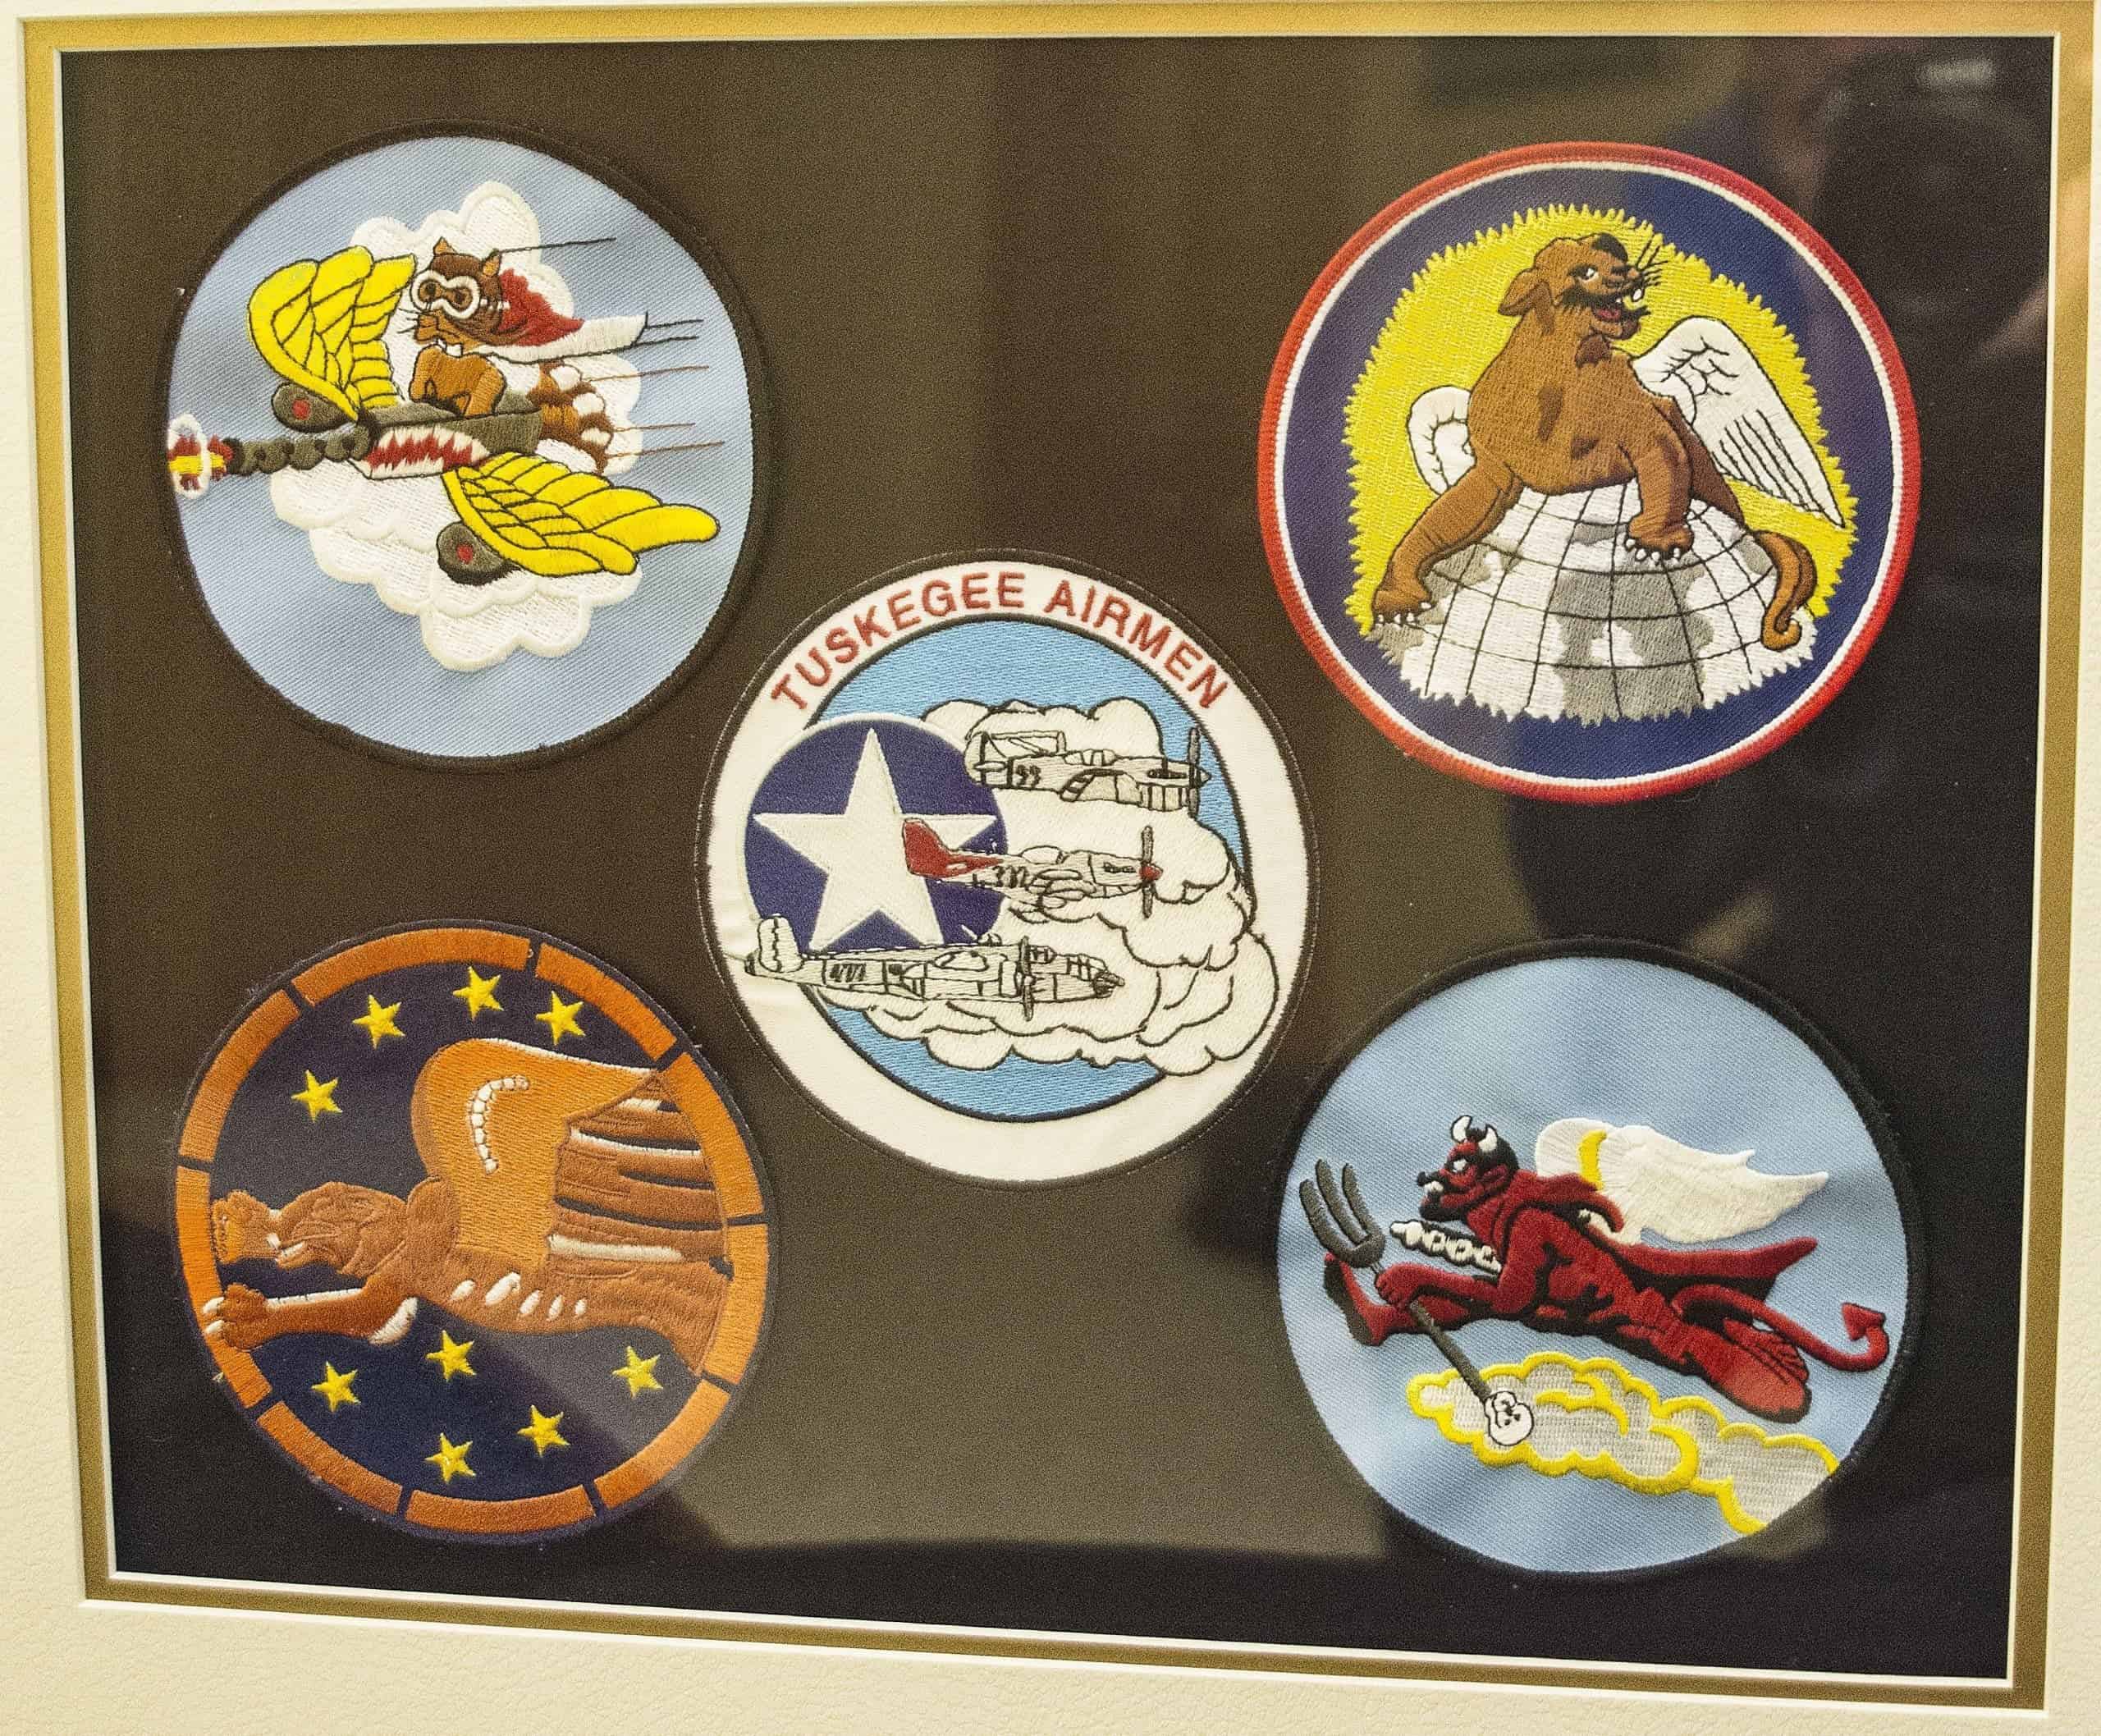 tuskegee airmen logo